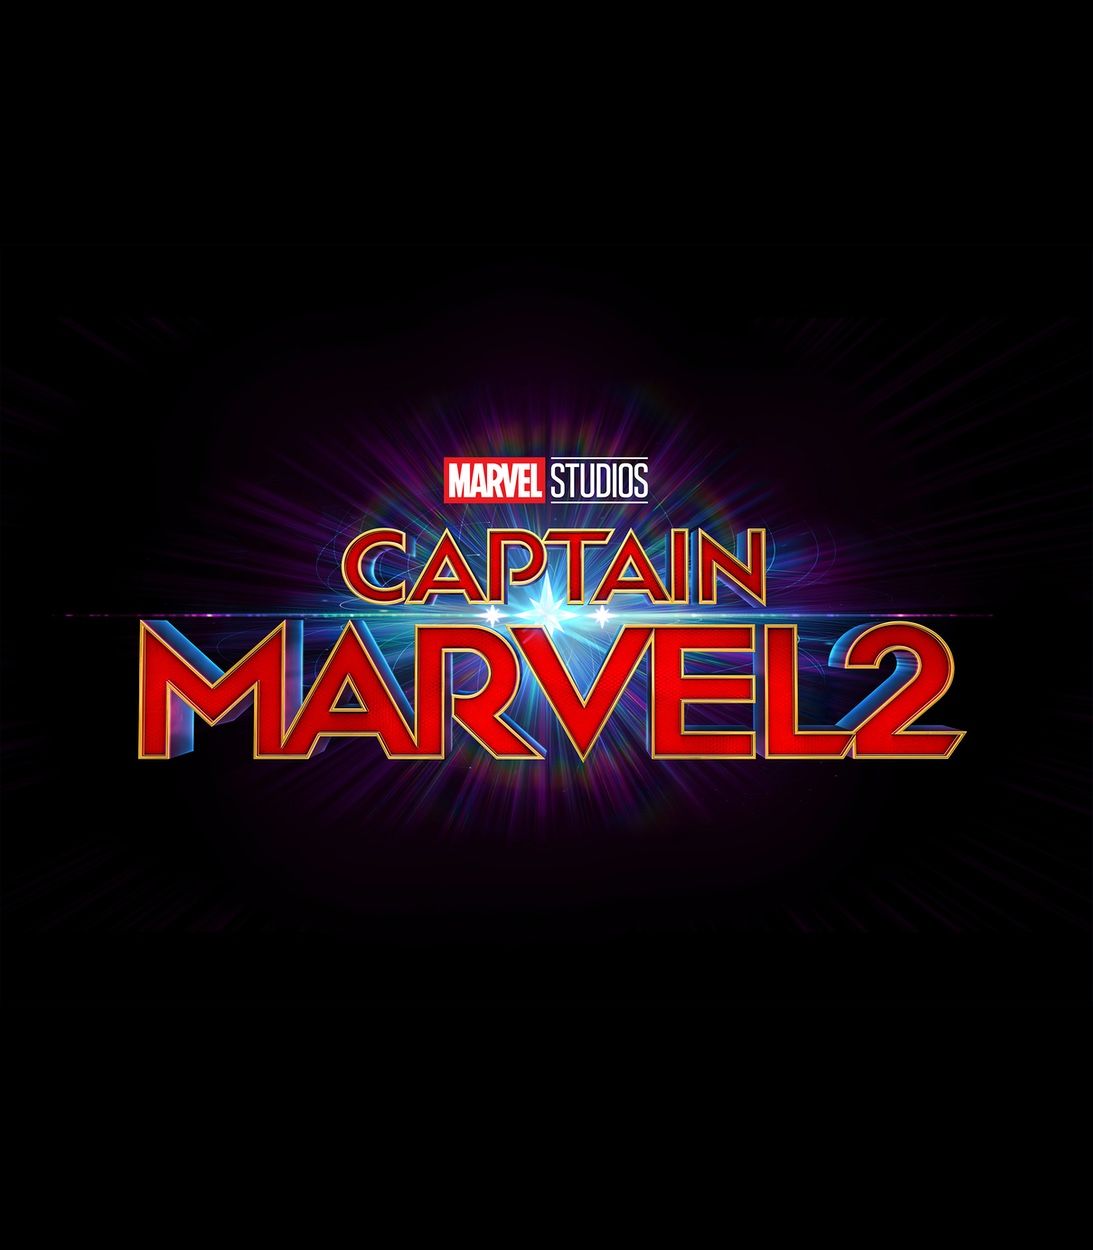 Captain Marvel 2 movie logo